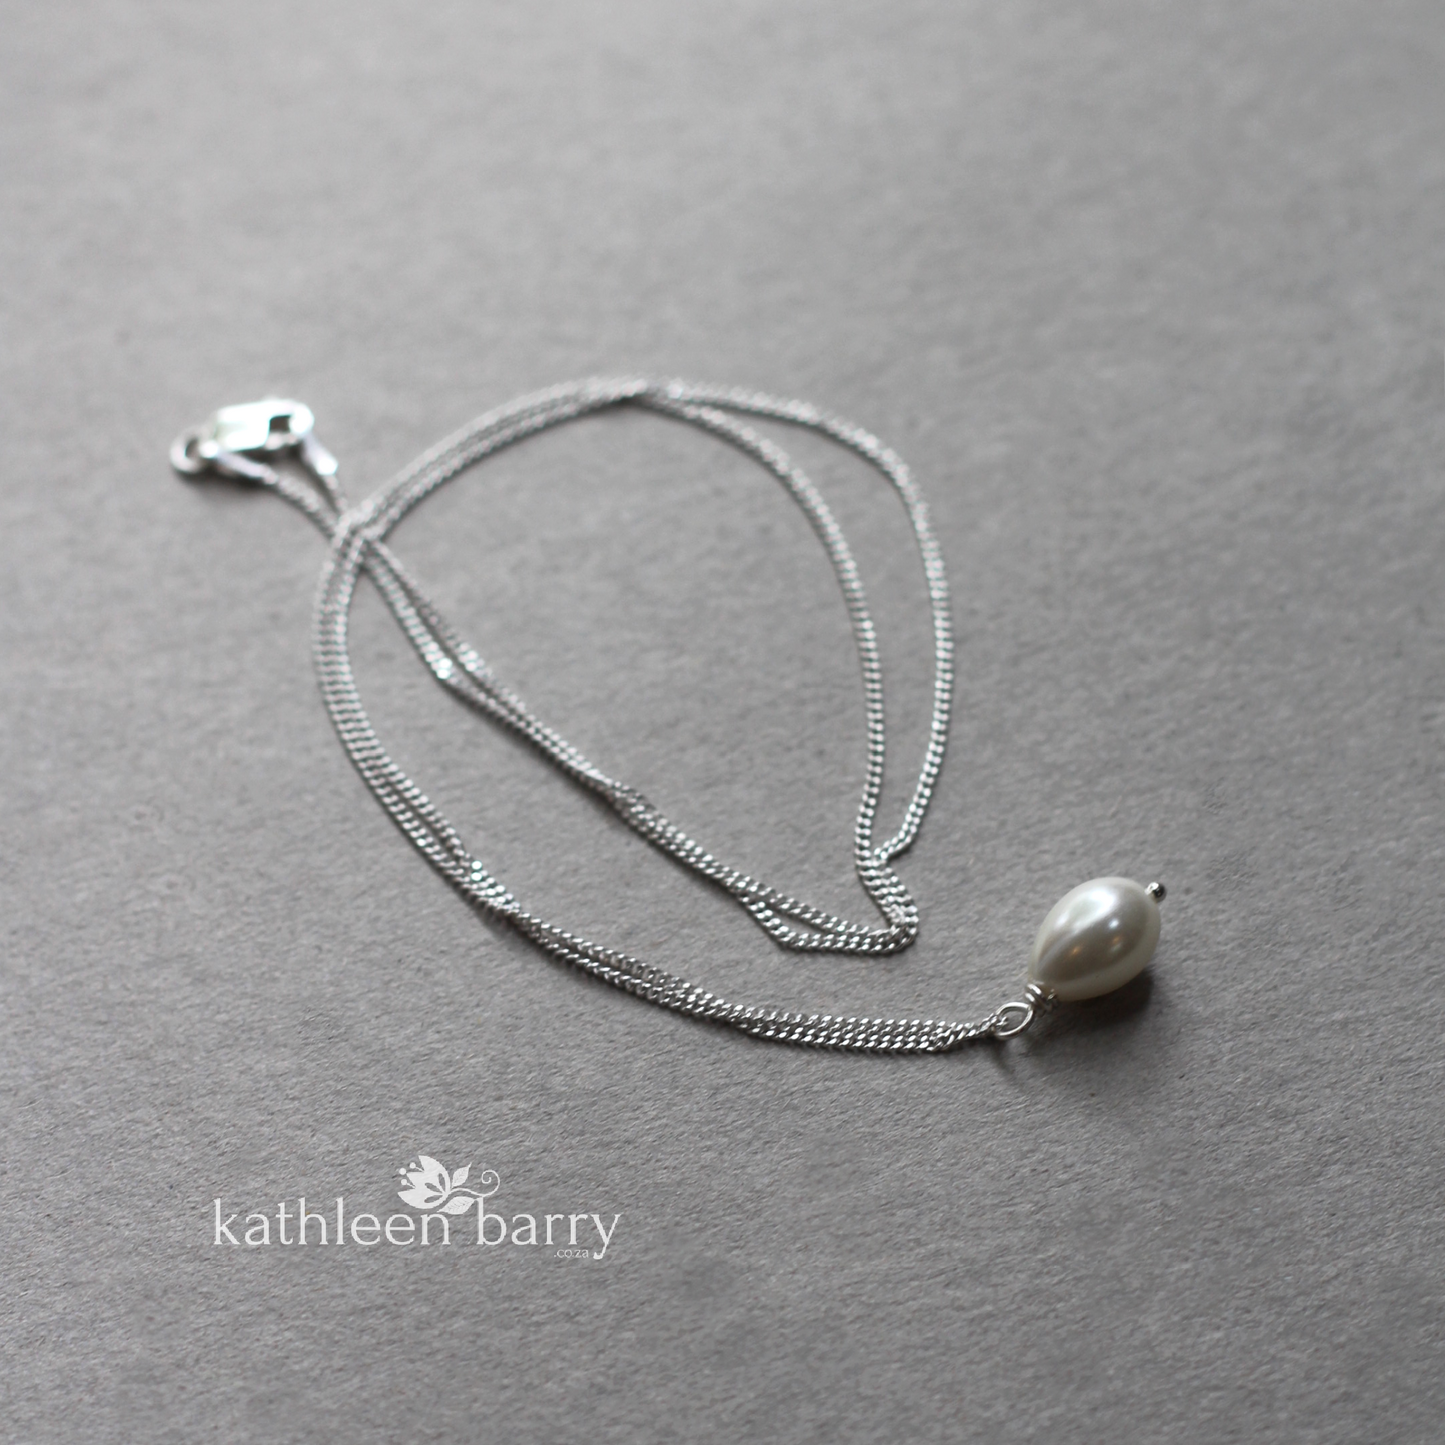 single pearl drop chain necklace dainty bridal jewellery idea kathleen barry